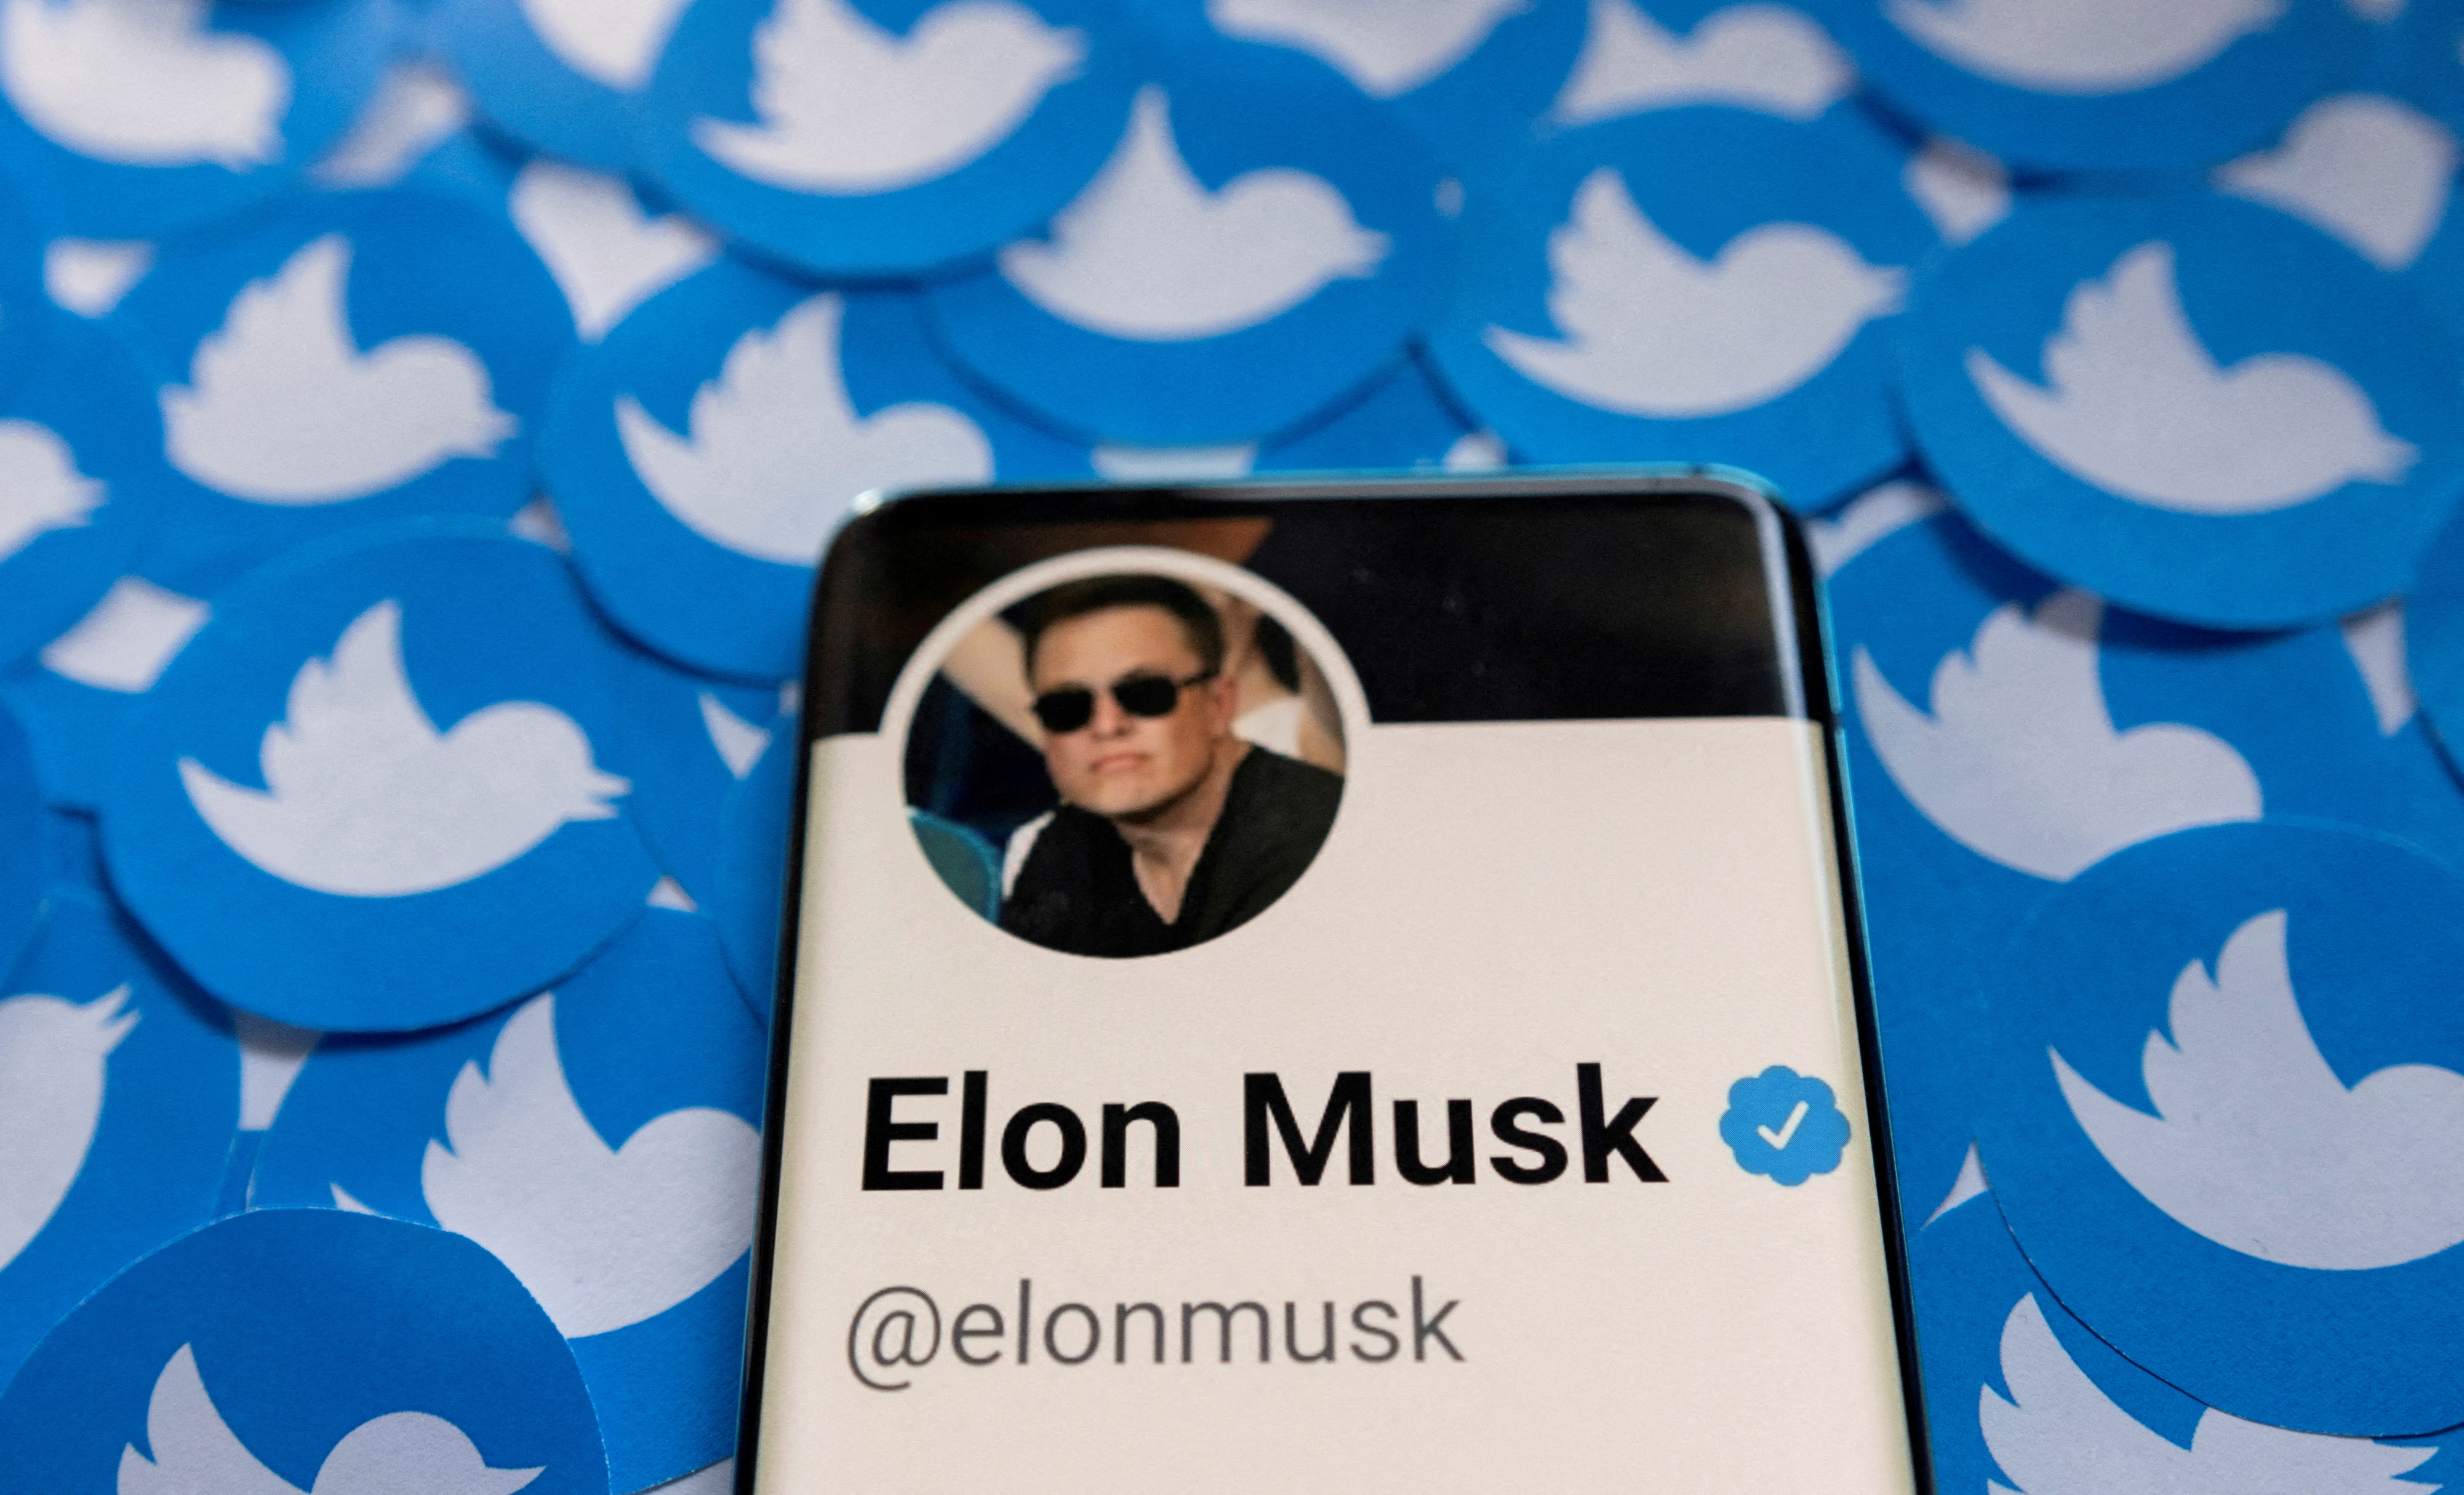 Elon Musk compró Twitter (Foto: REUTERS/Dado Ruvic/Illustration/File Photo/File Photo)